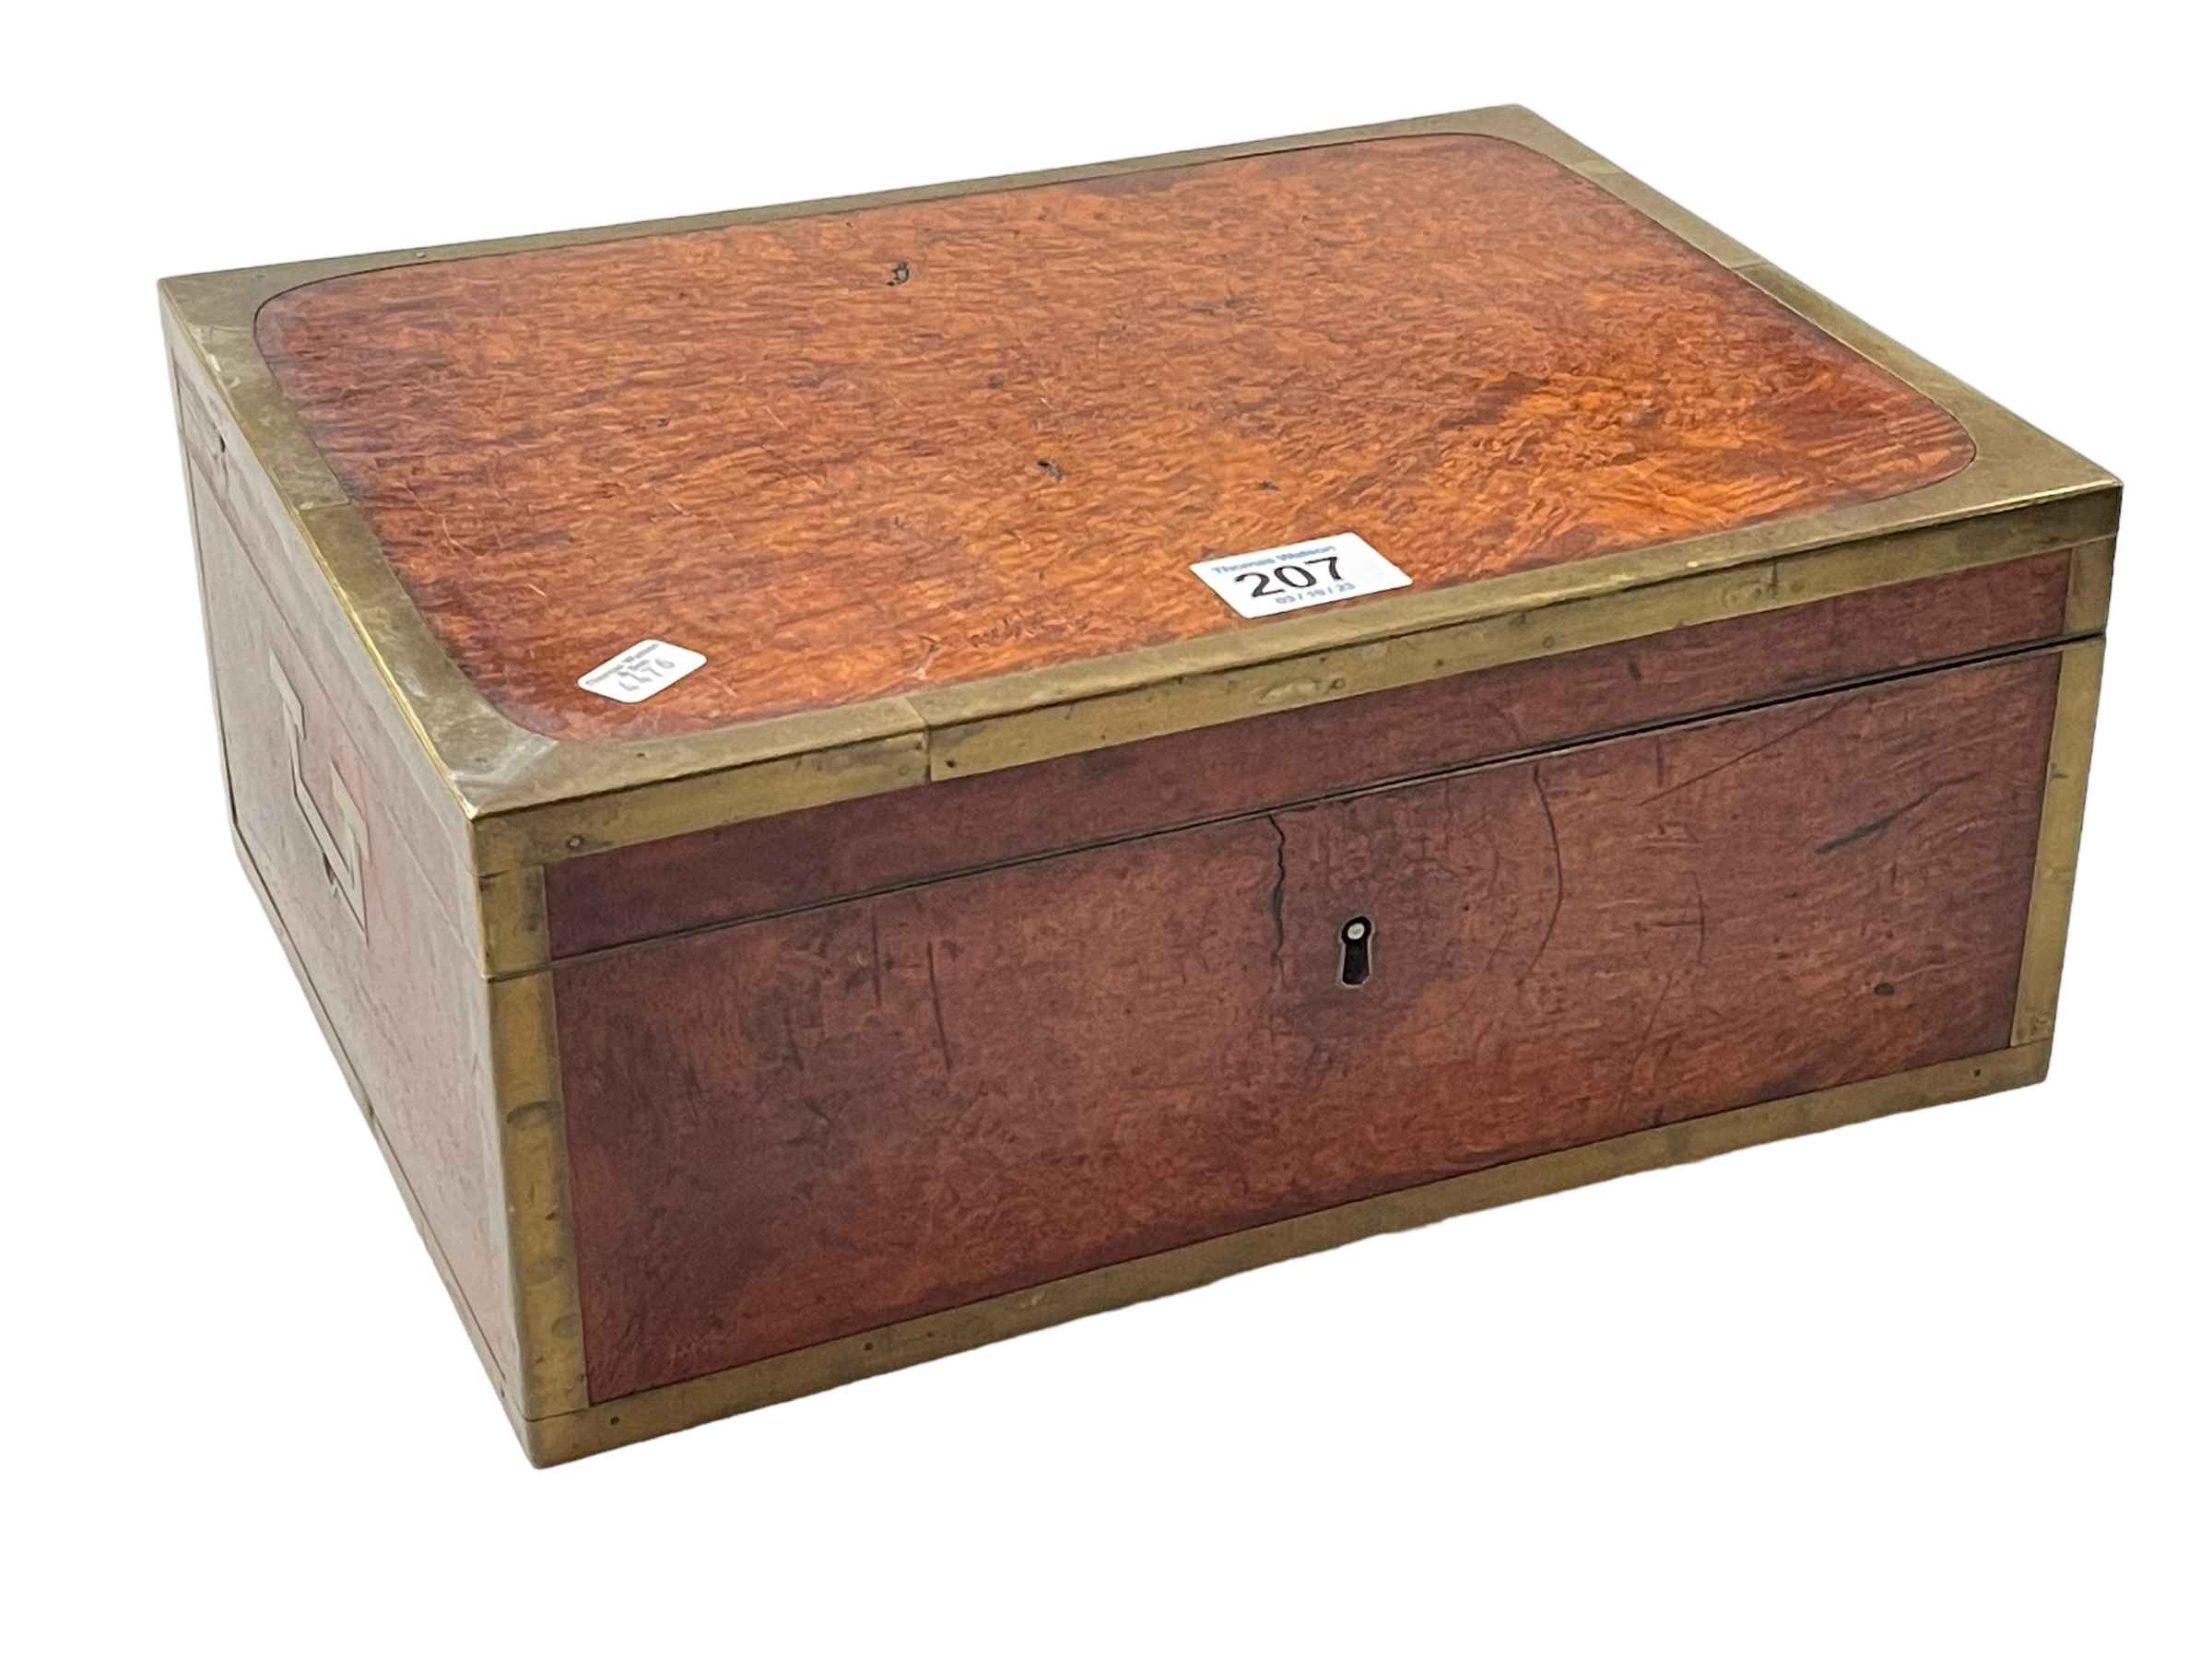 19th Century brass bound maple/burr wood toilet box.